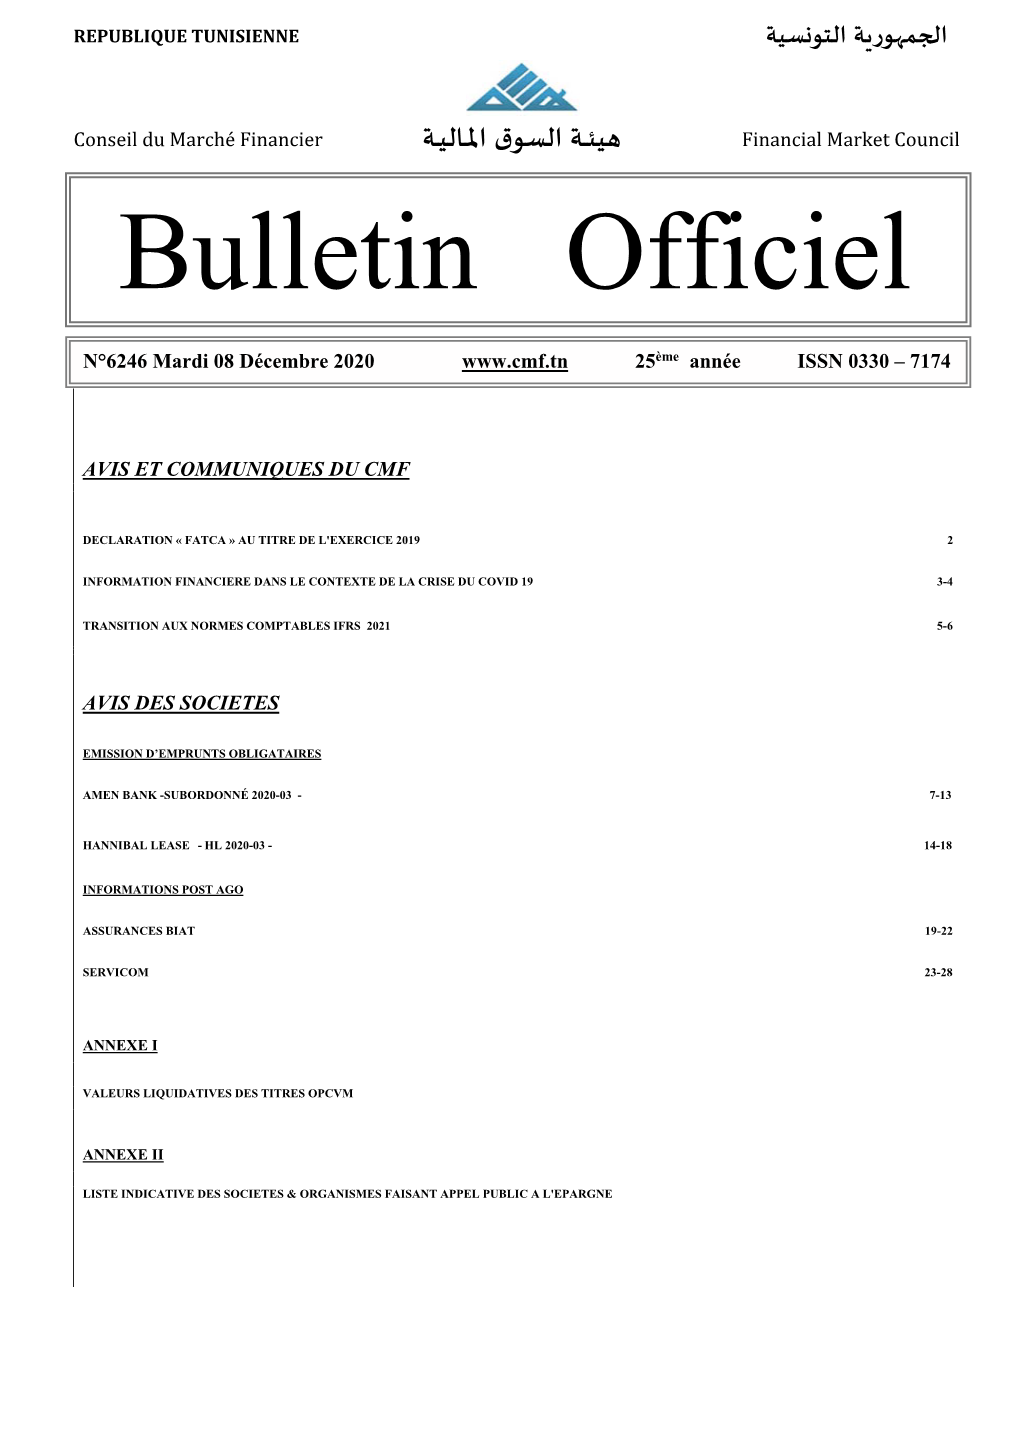 Bulletin Officiel